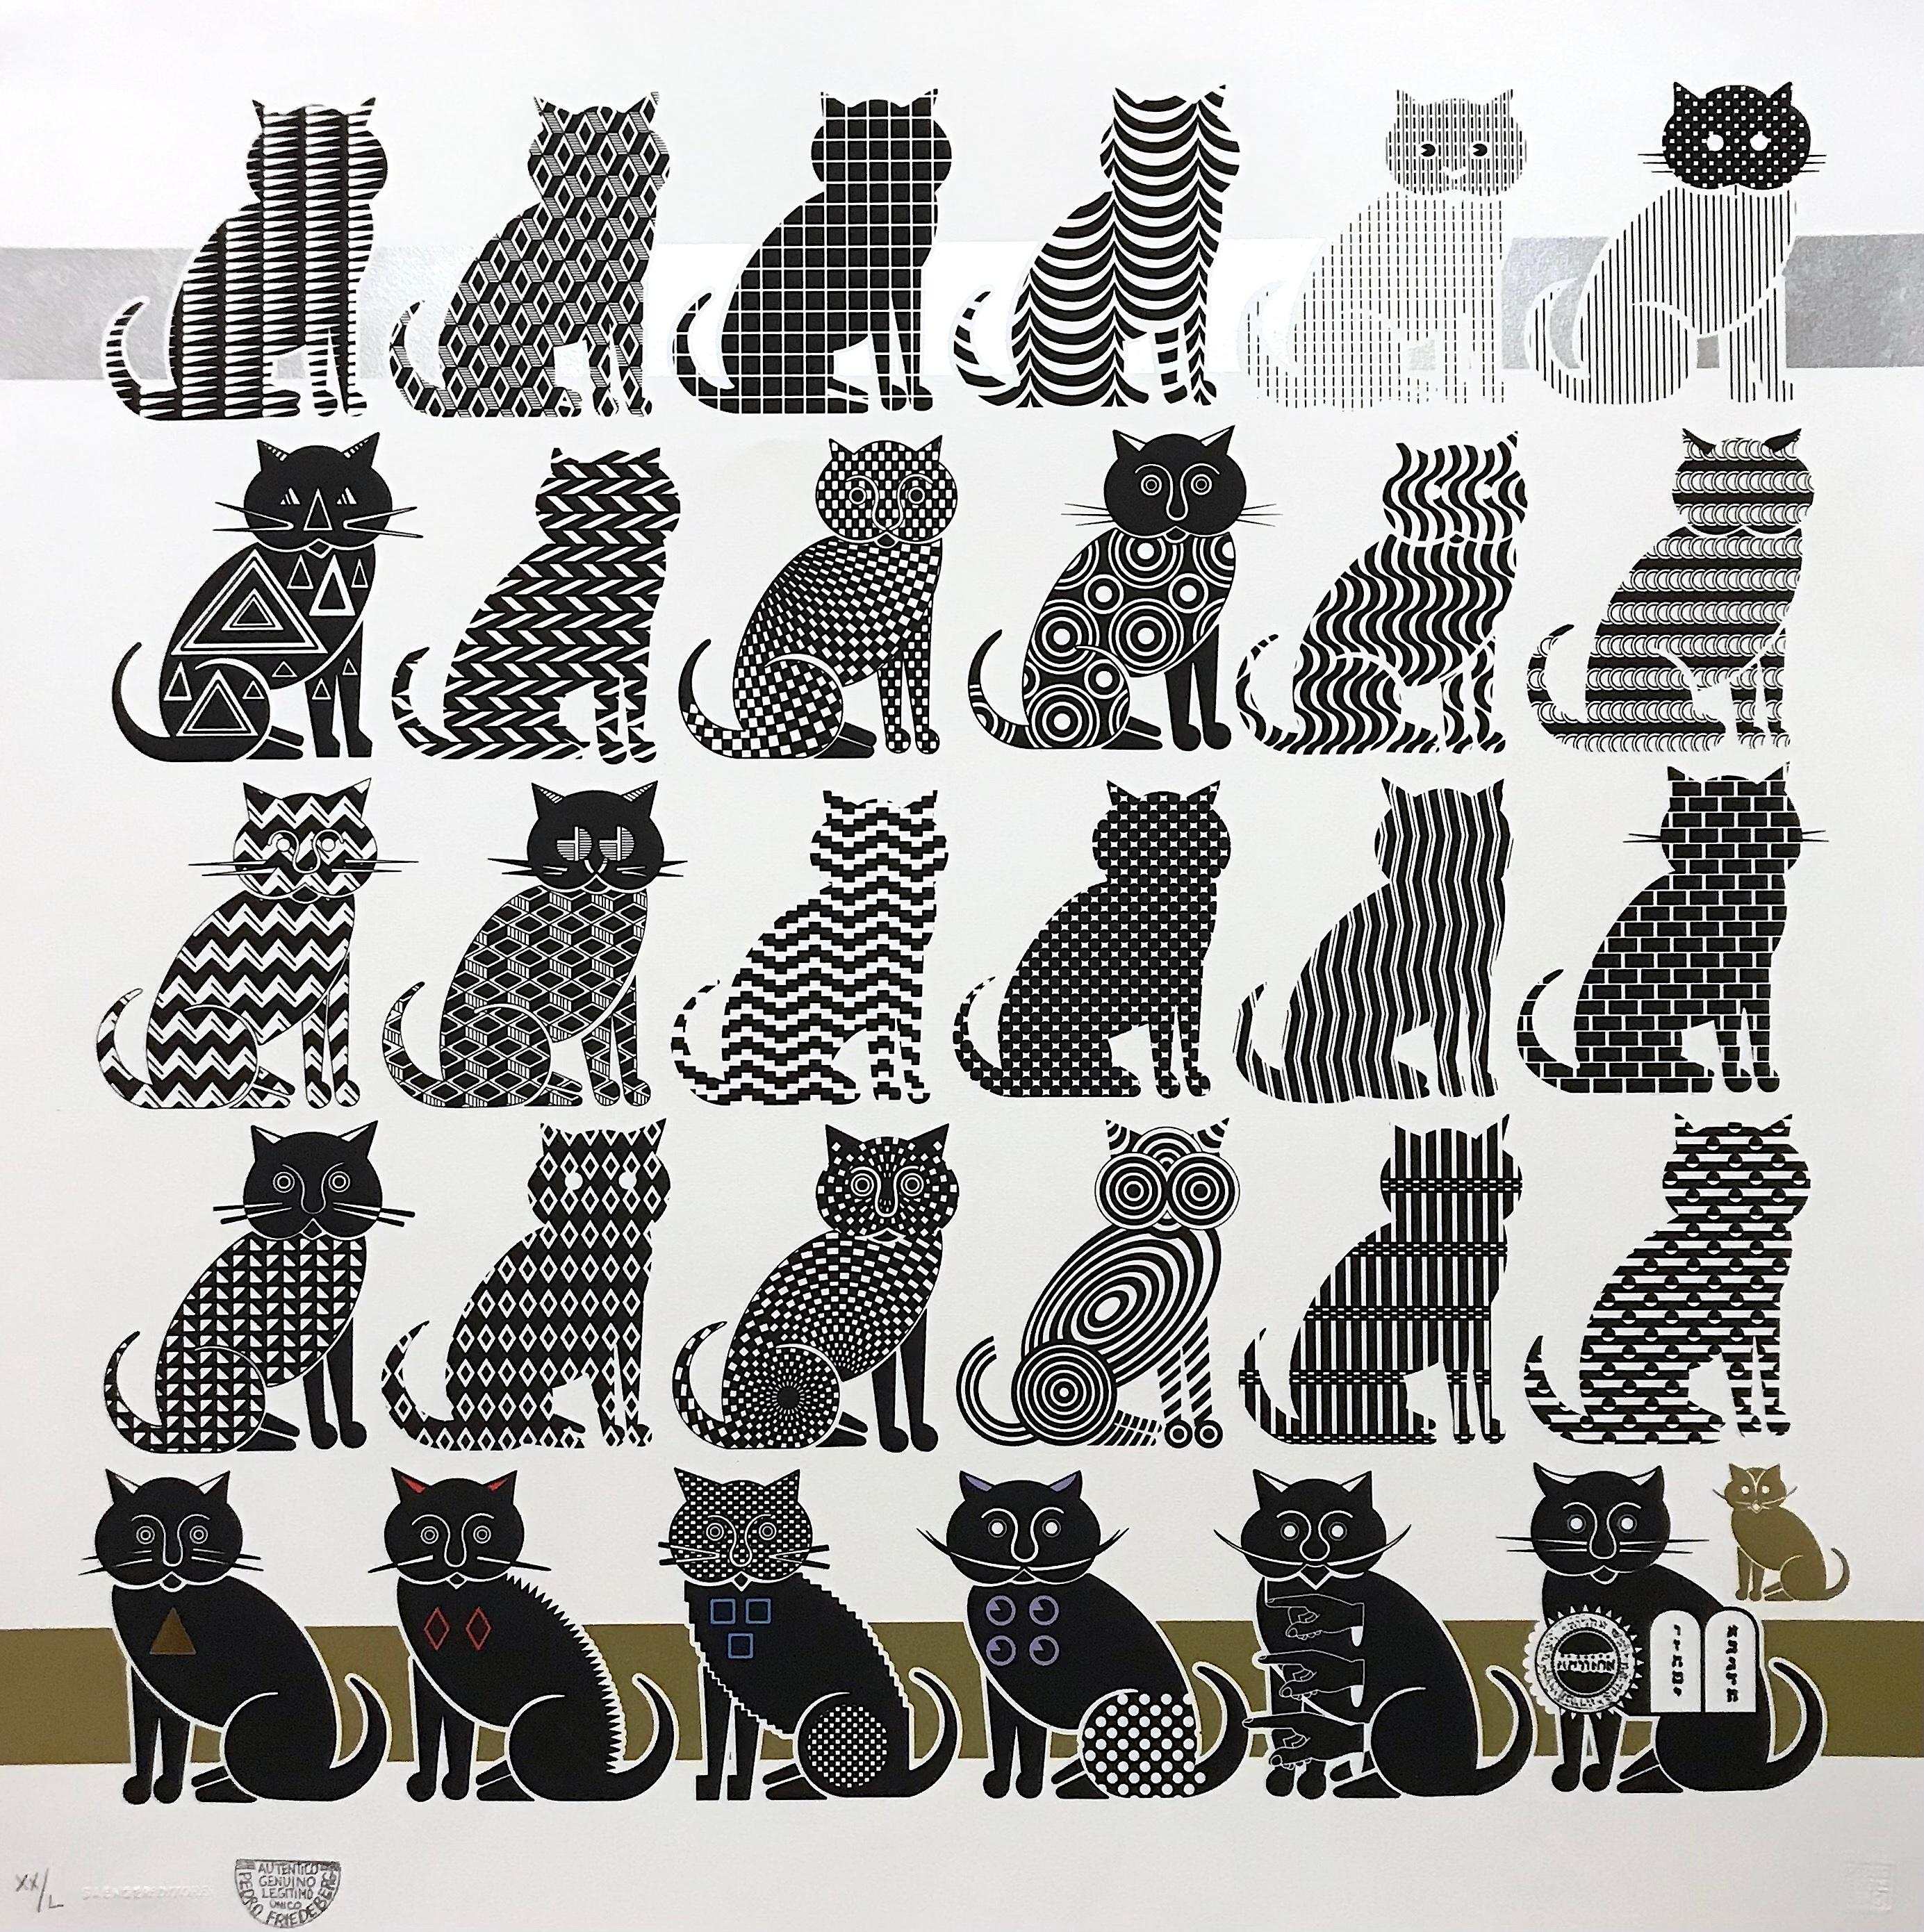 Pedro Friedeberg Figurative Print - "Cats" - 2d surrealist print, black and white patterns, animals